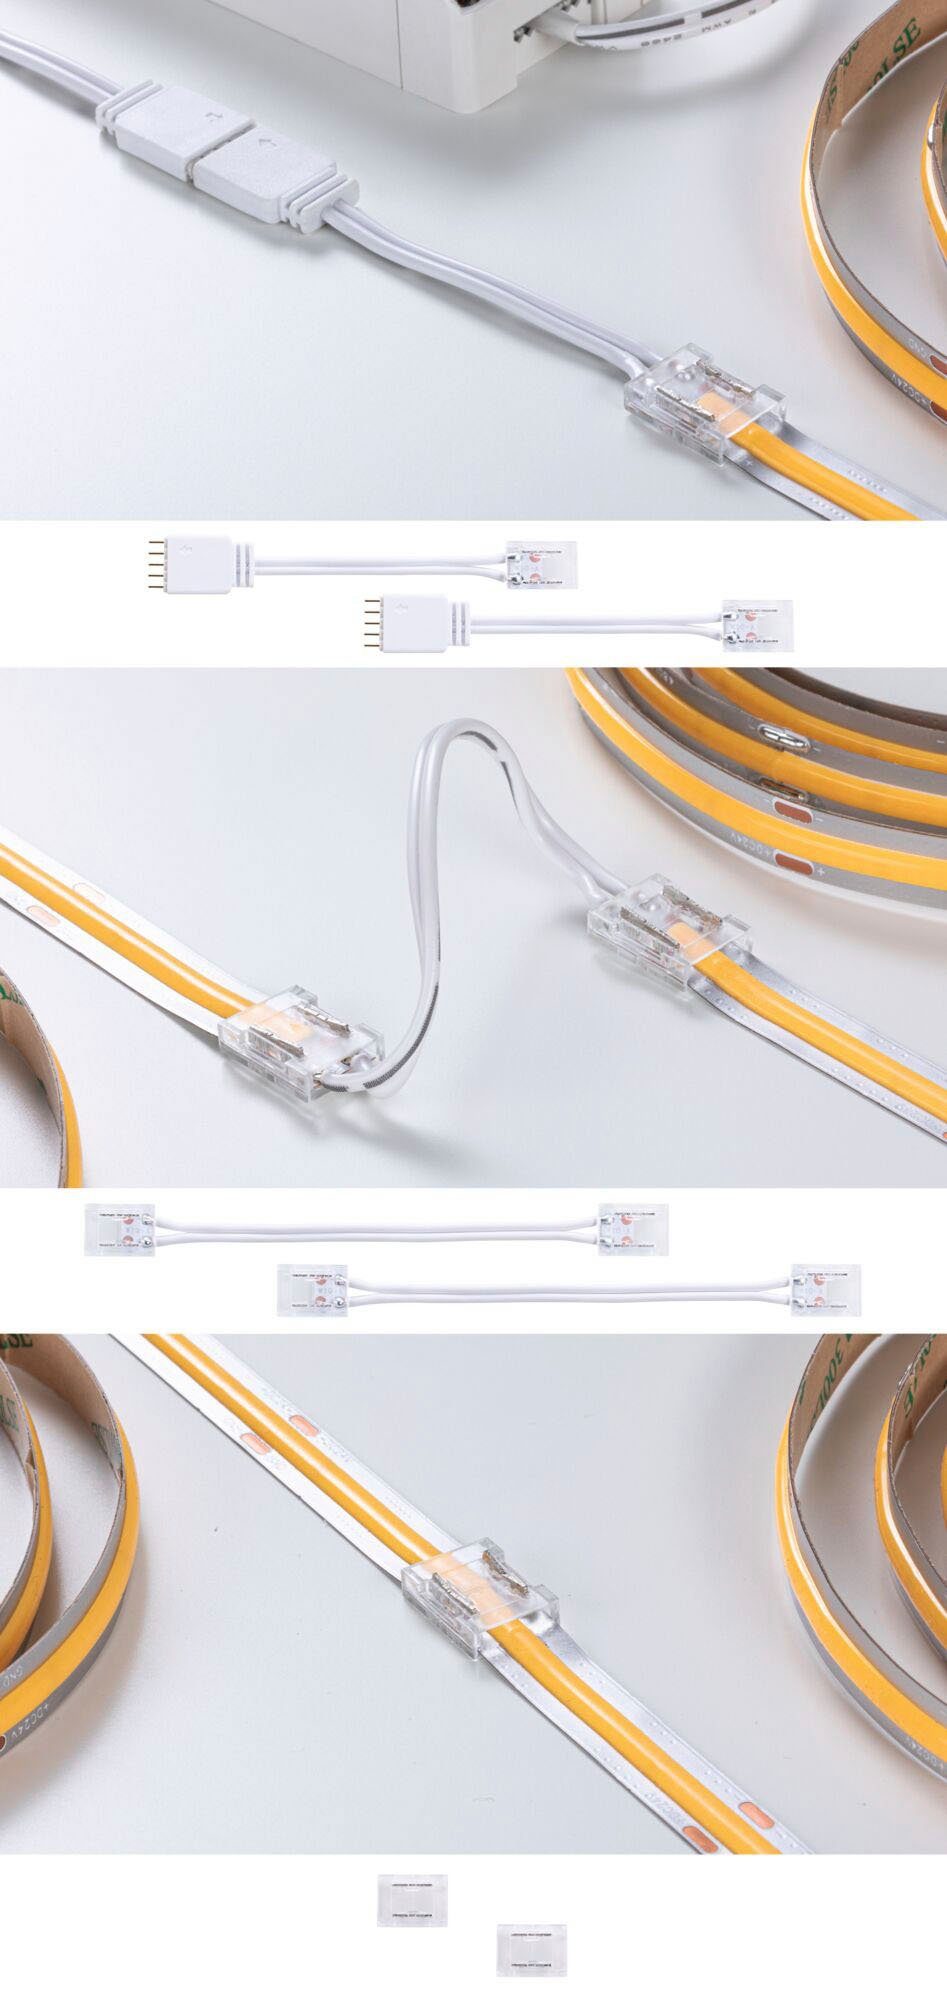 Full-Line COB Set 1000 LED-Streifen 2er-Set Connector 133m MaxLED Paulmann